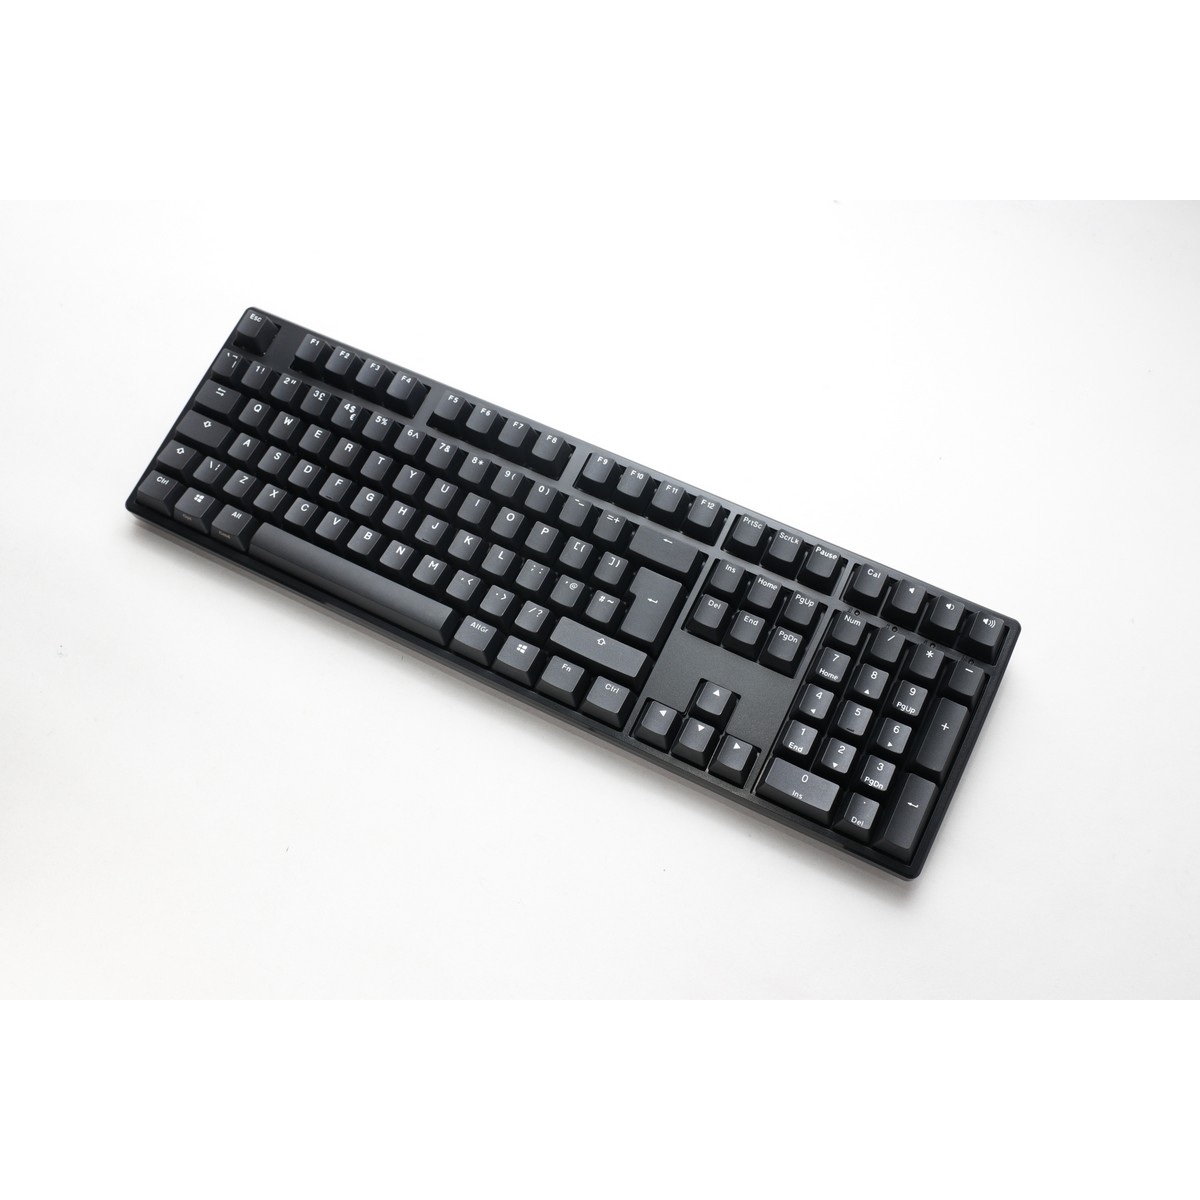 Ducky - Ducky Origin USB Mechanical Gaming Keyboard Cherry MX Red - Black UK Layout